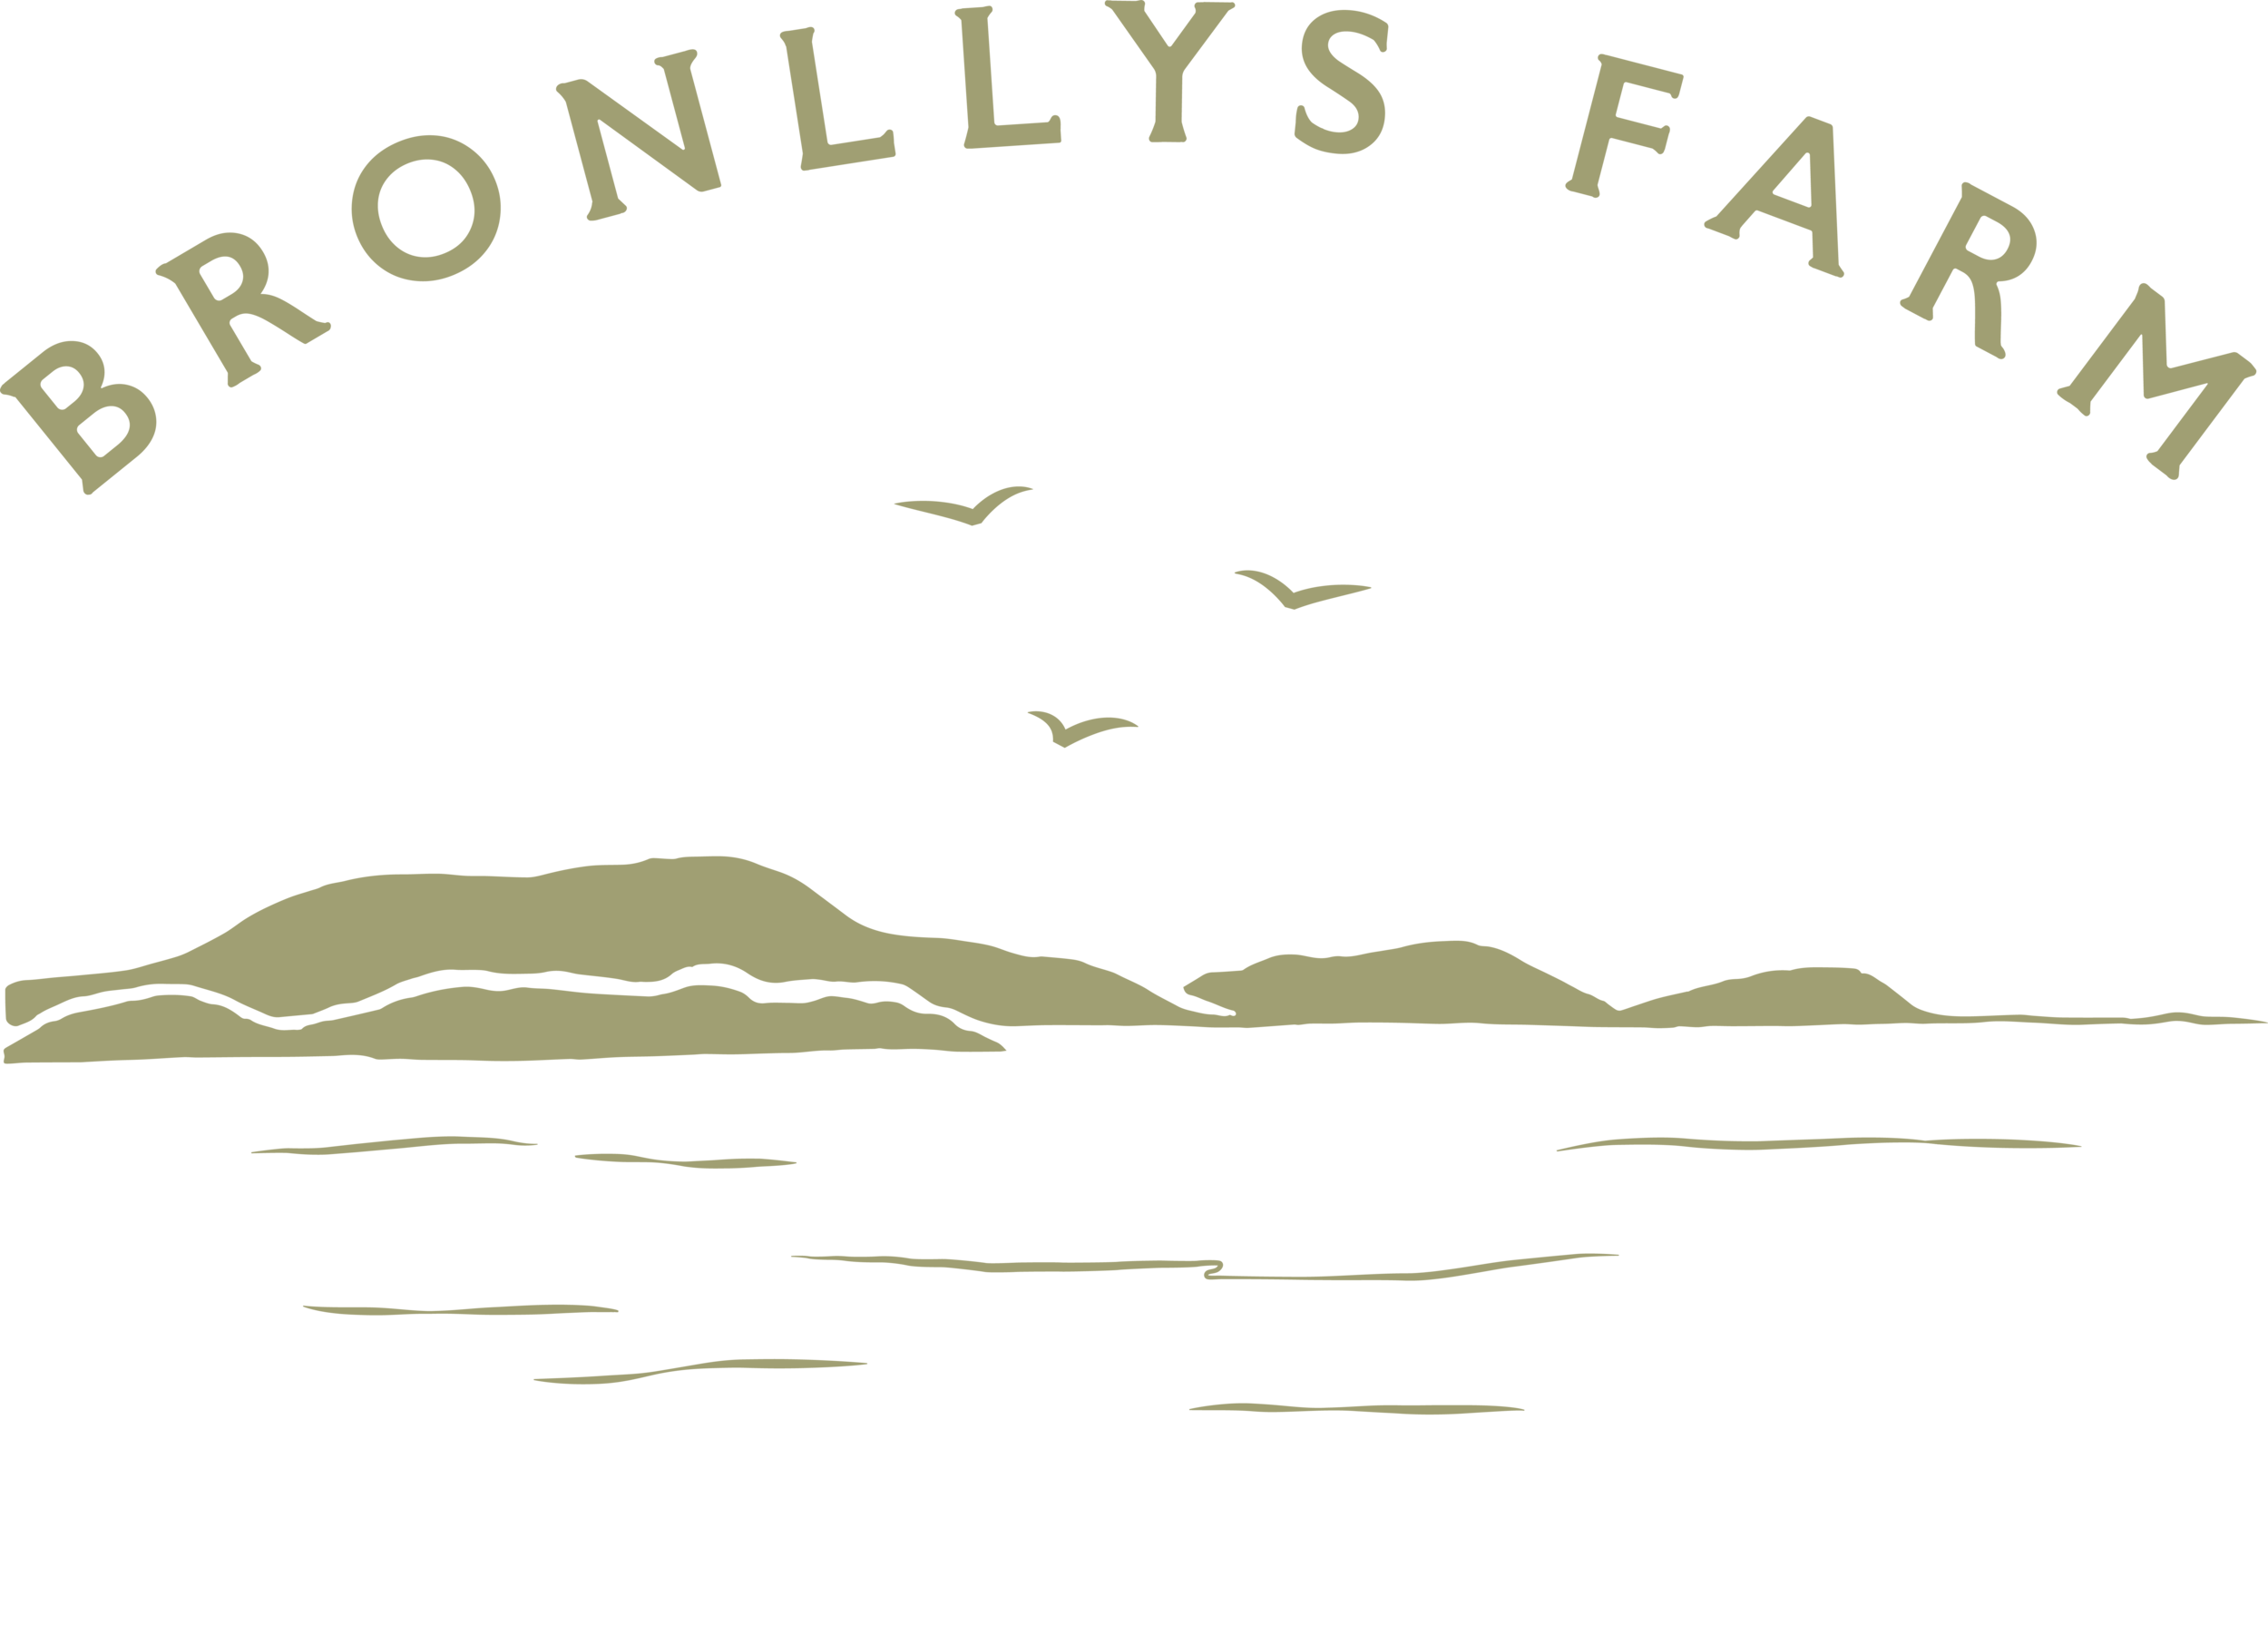 Bronllys Farm Self-Catering